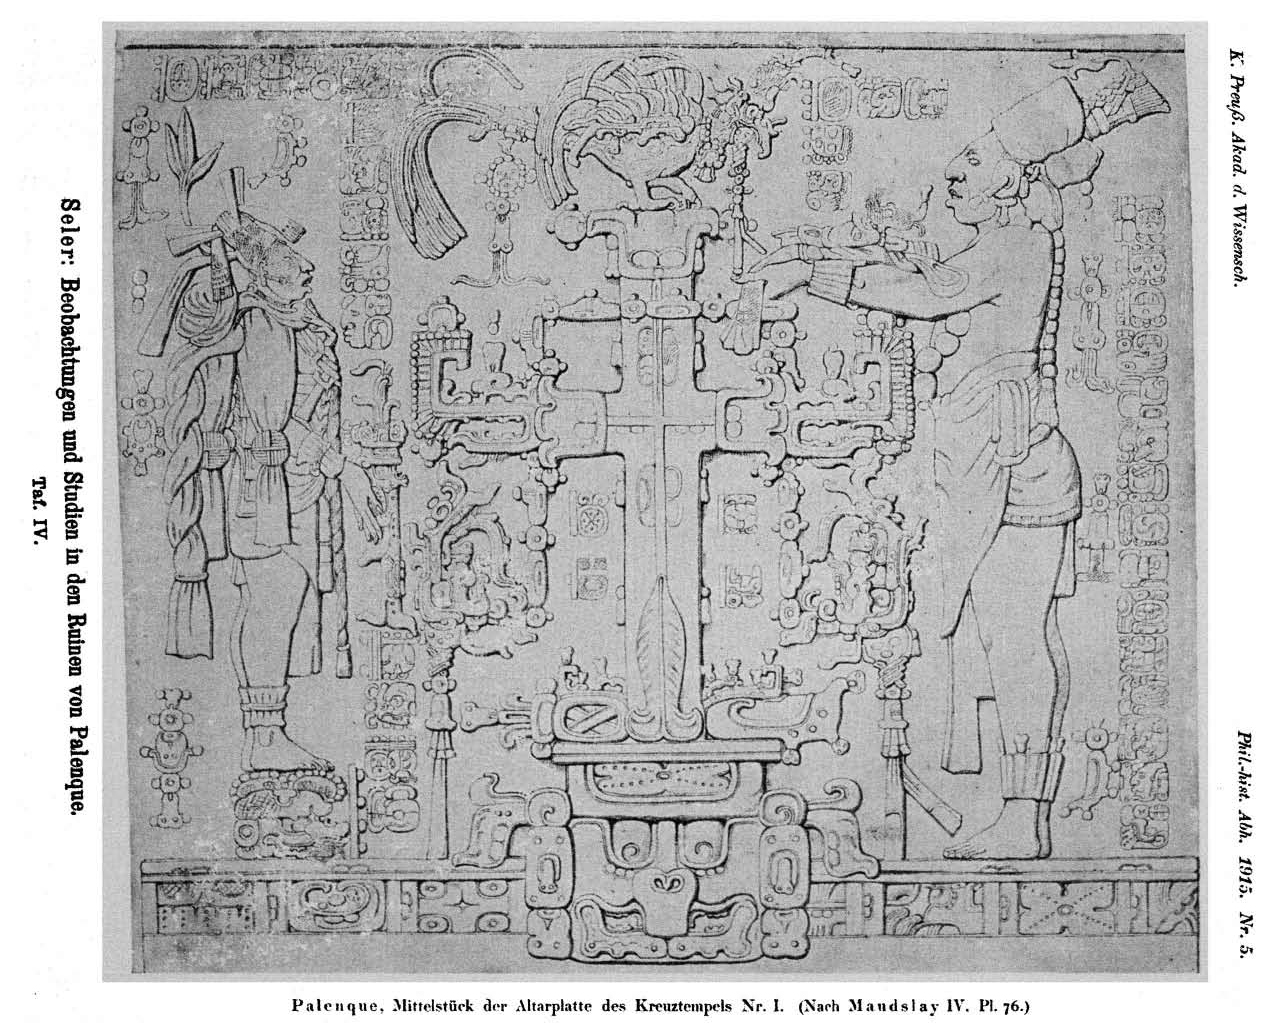 altarbild des kreuztempels von palenque